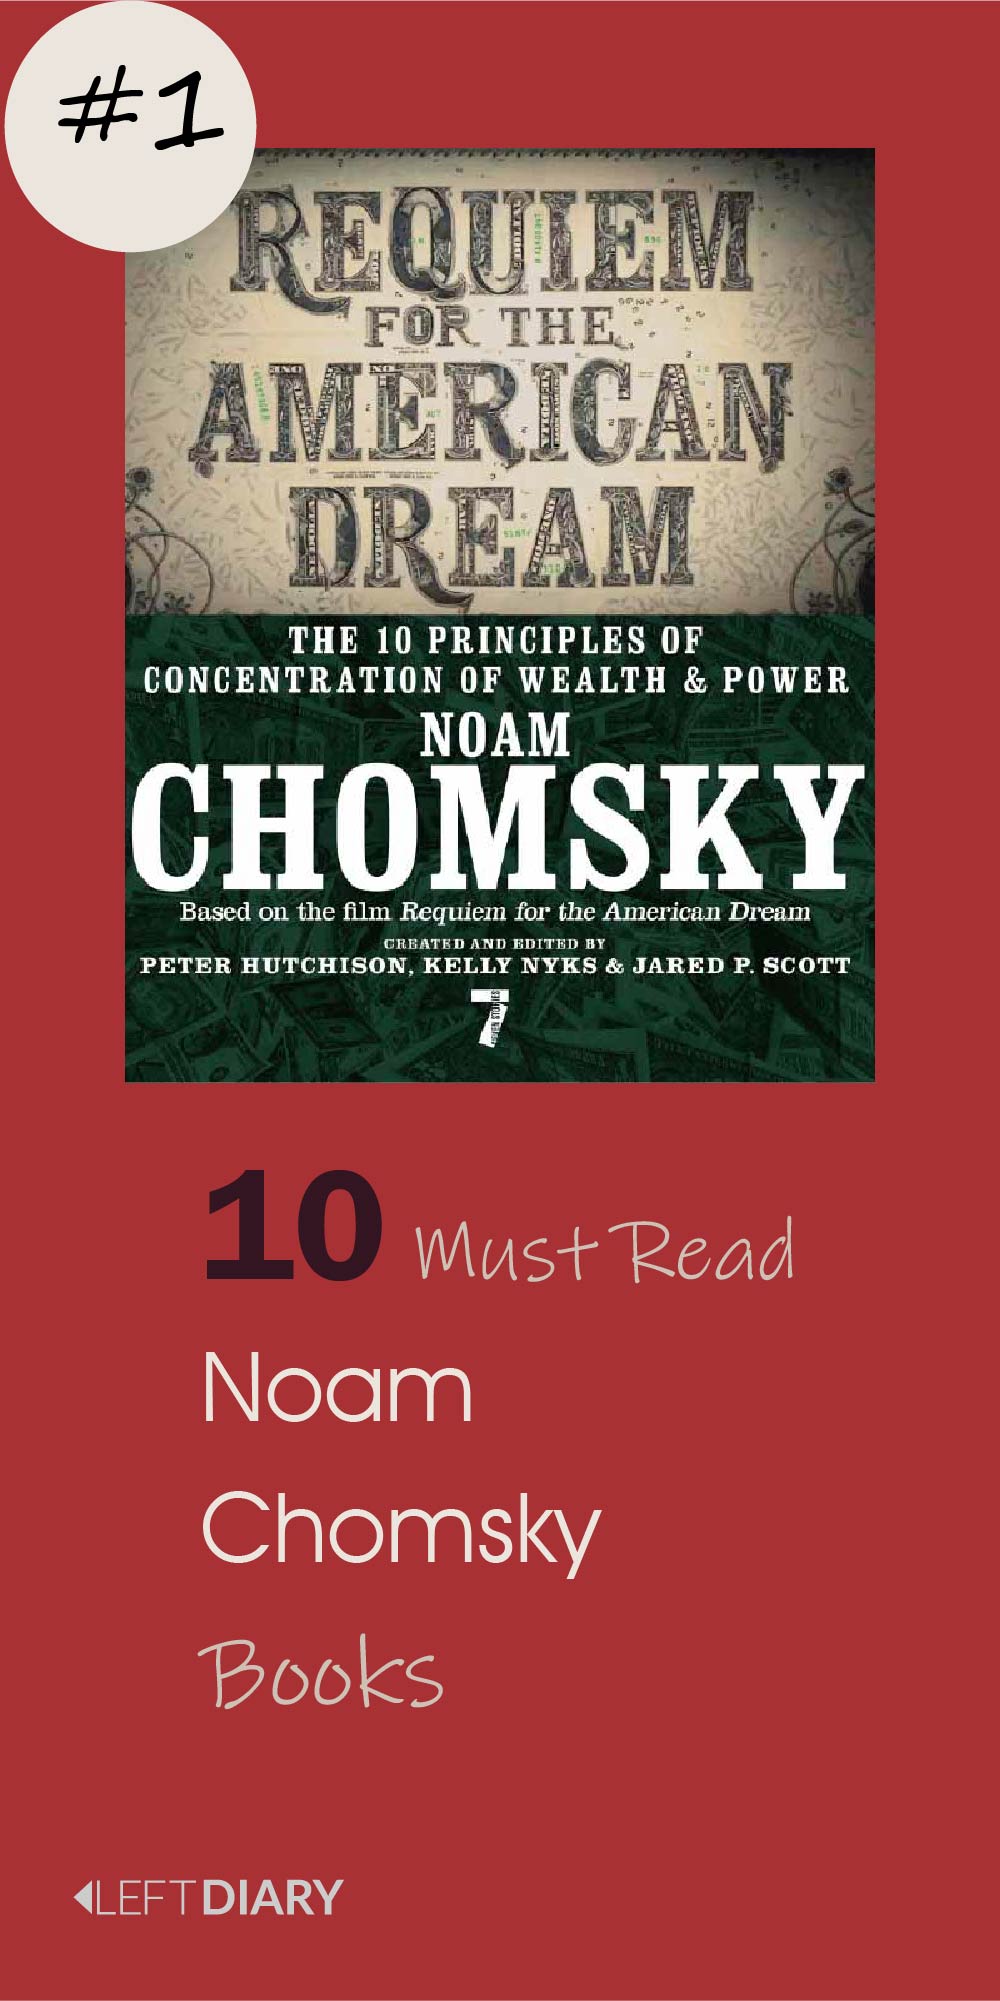 top 10 must read books - 1 Noam Chomsky Book Requiem for the American Dream